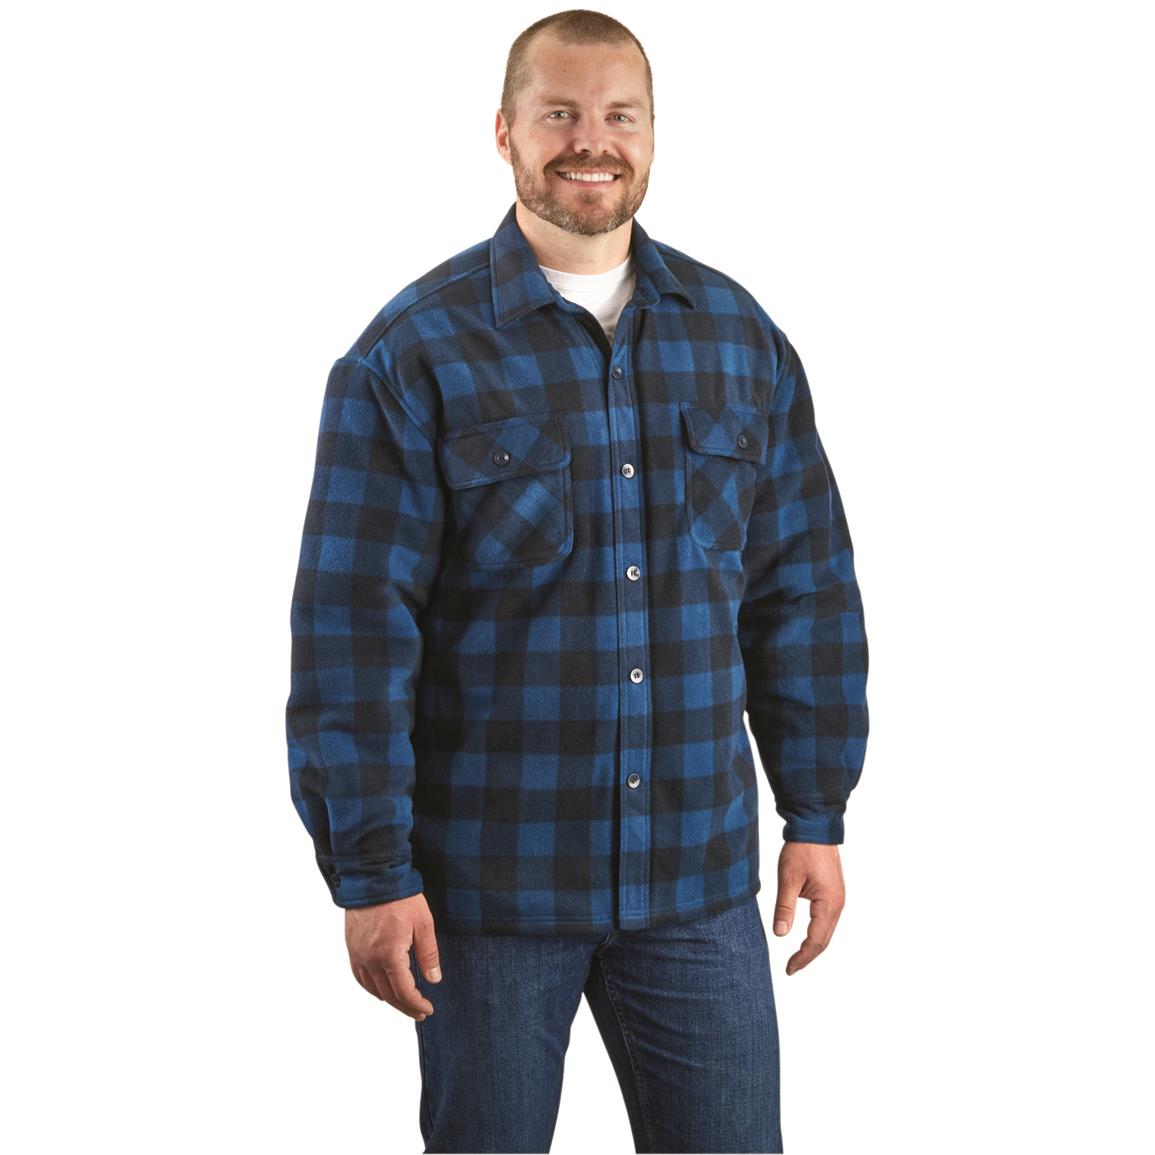 Carhartt Men's Jacket Shirt Plus Size 4XL Gray Sherpa Lined Snaps Green Plaid